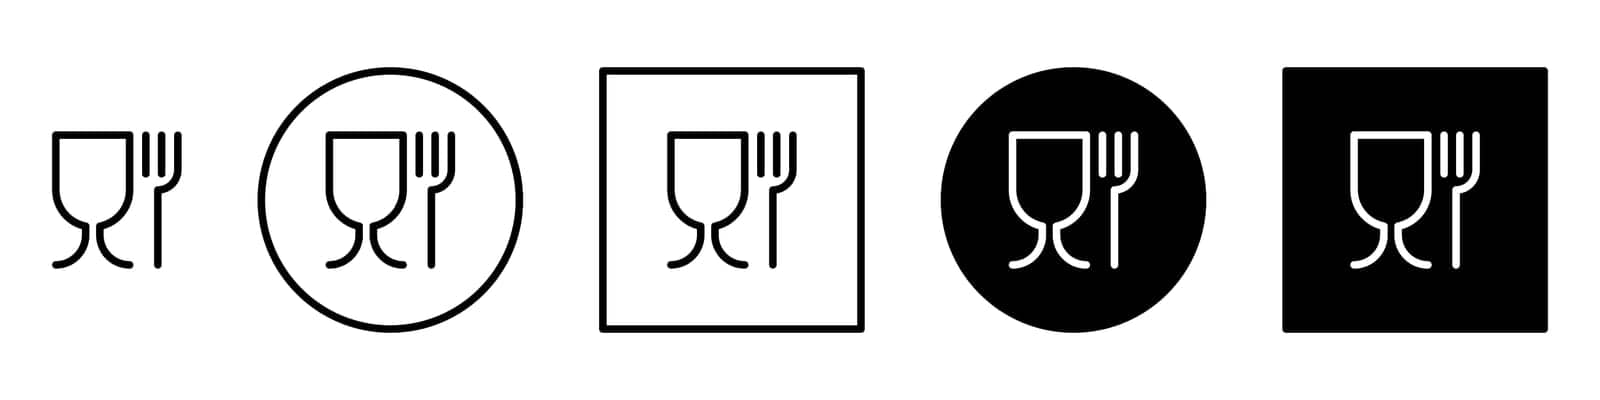 Food safe icon symbol set by misteremil